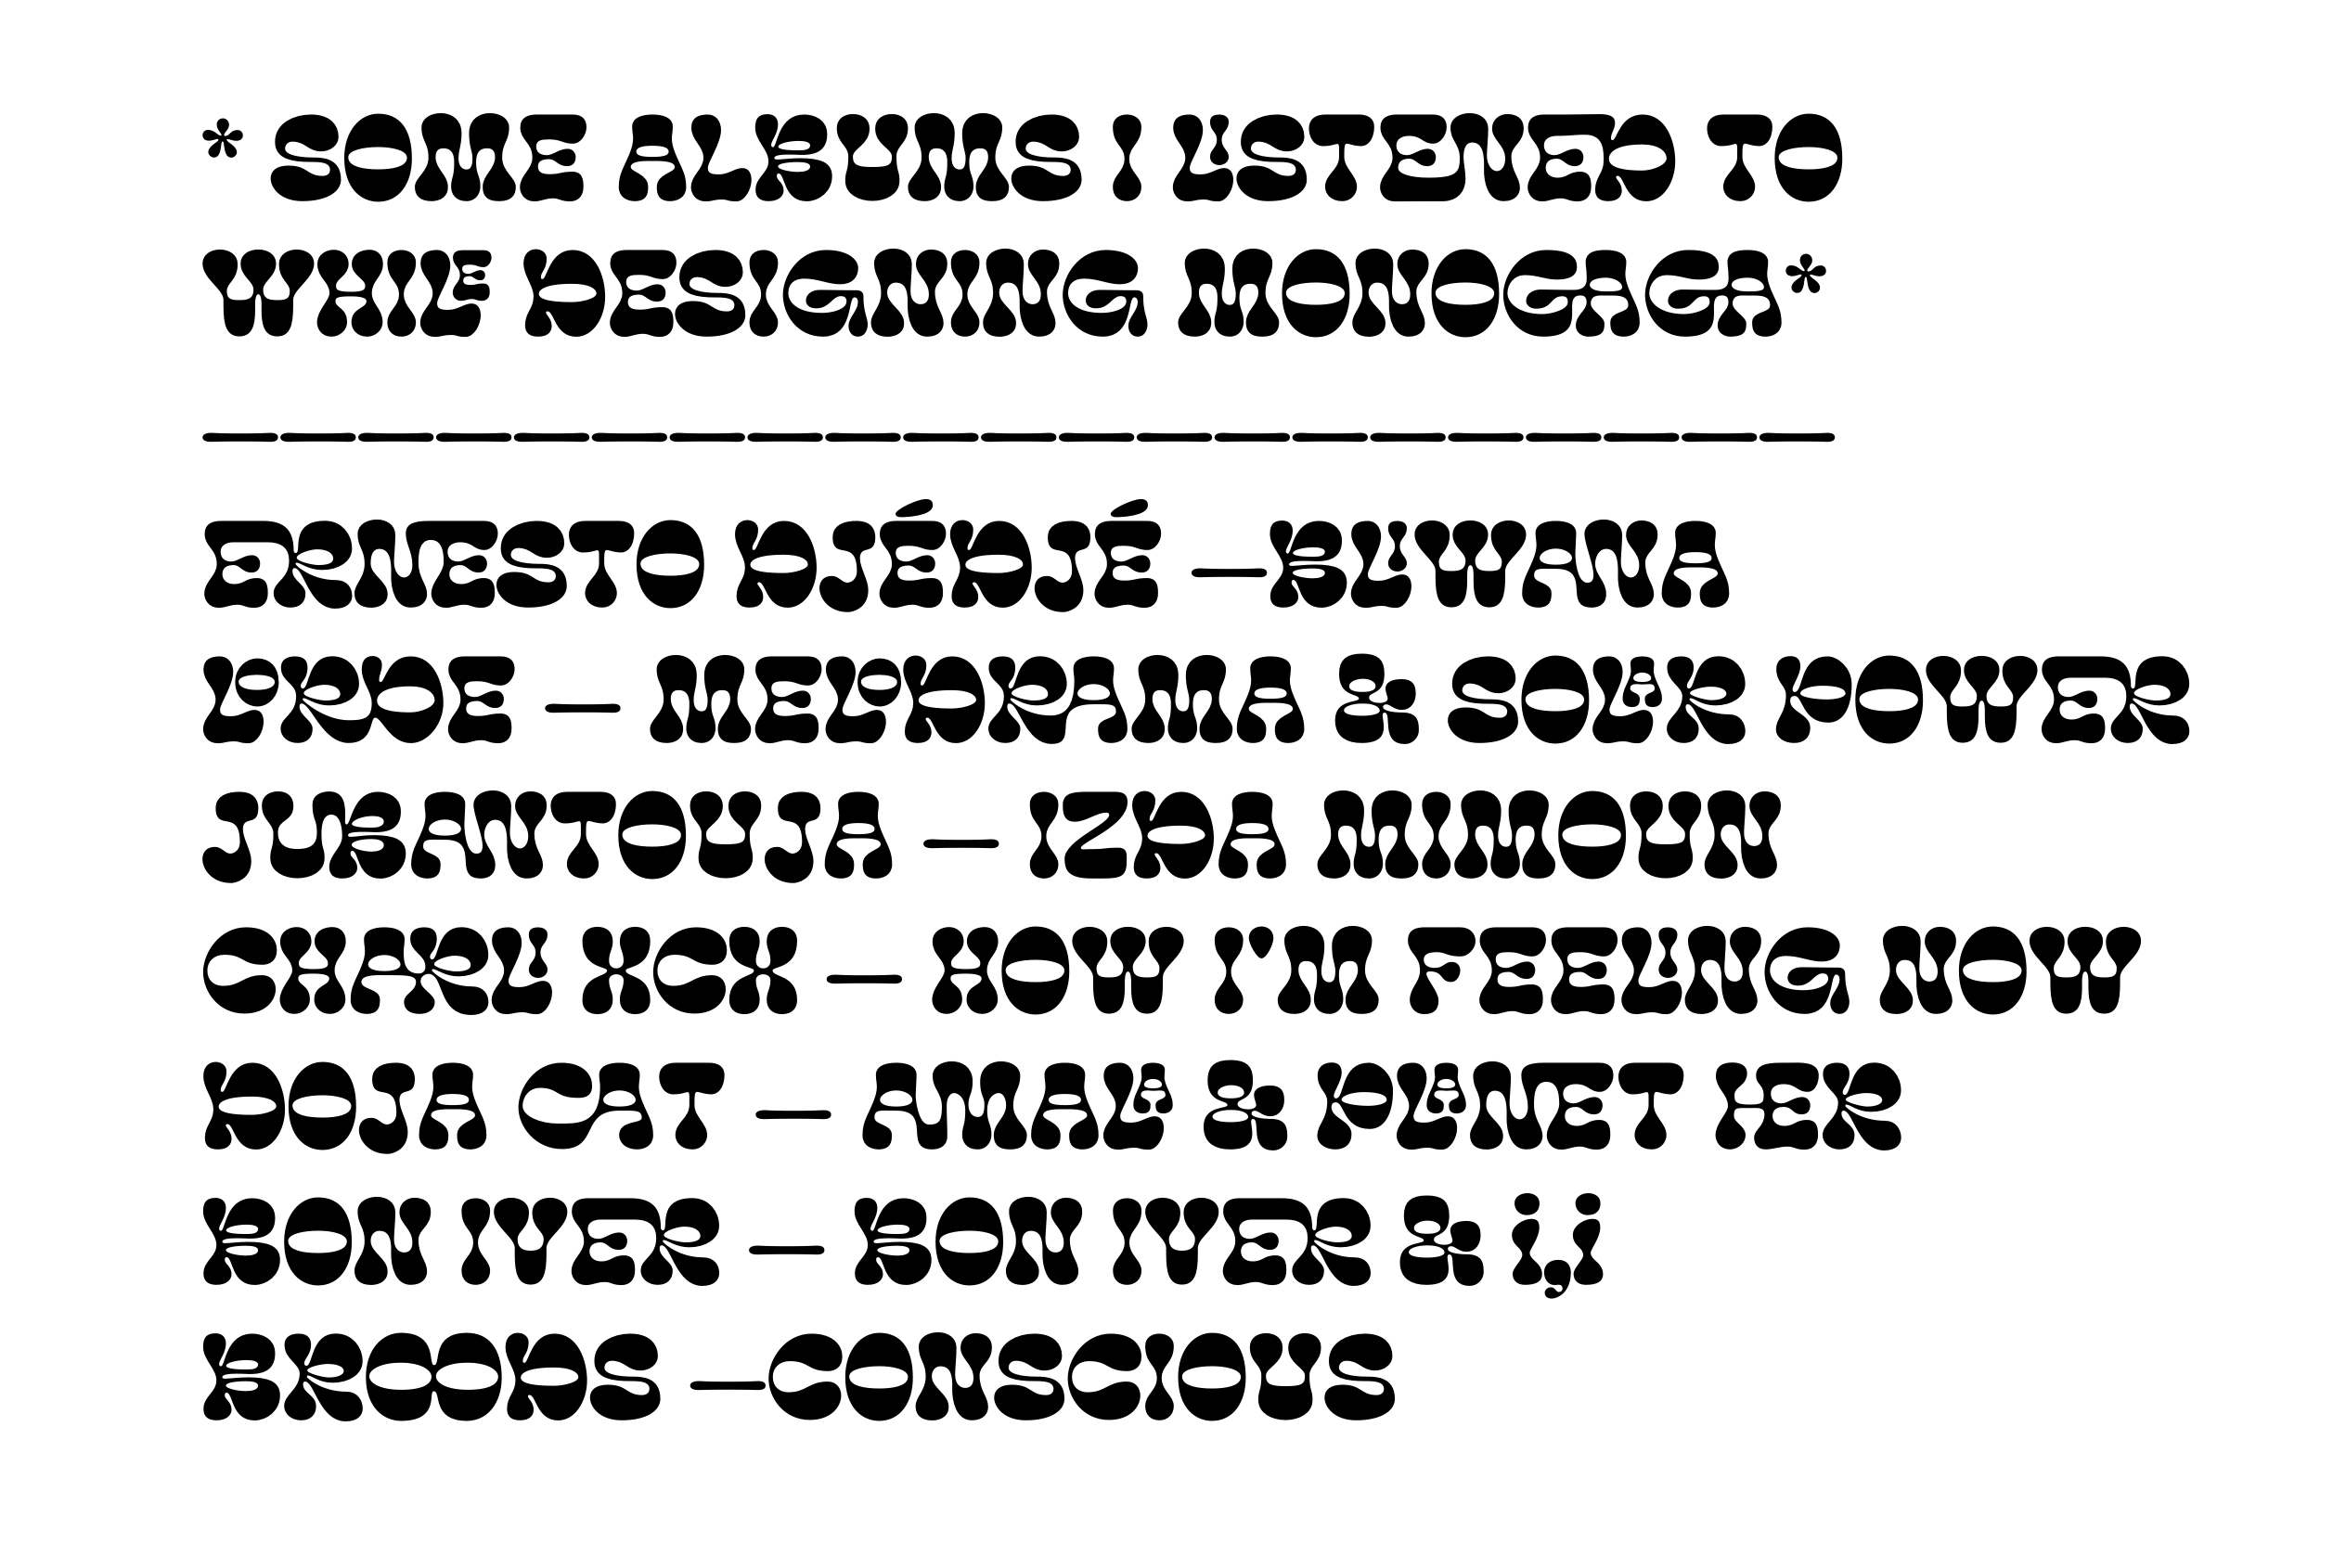 Some of the ligatures of Monogaga